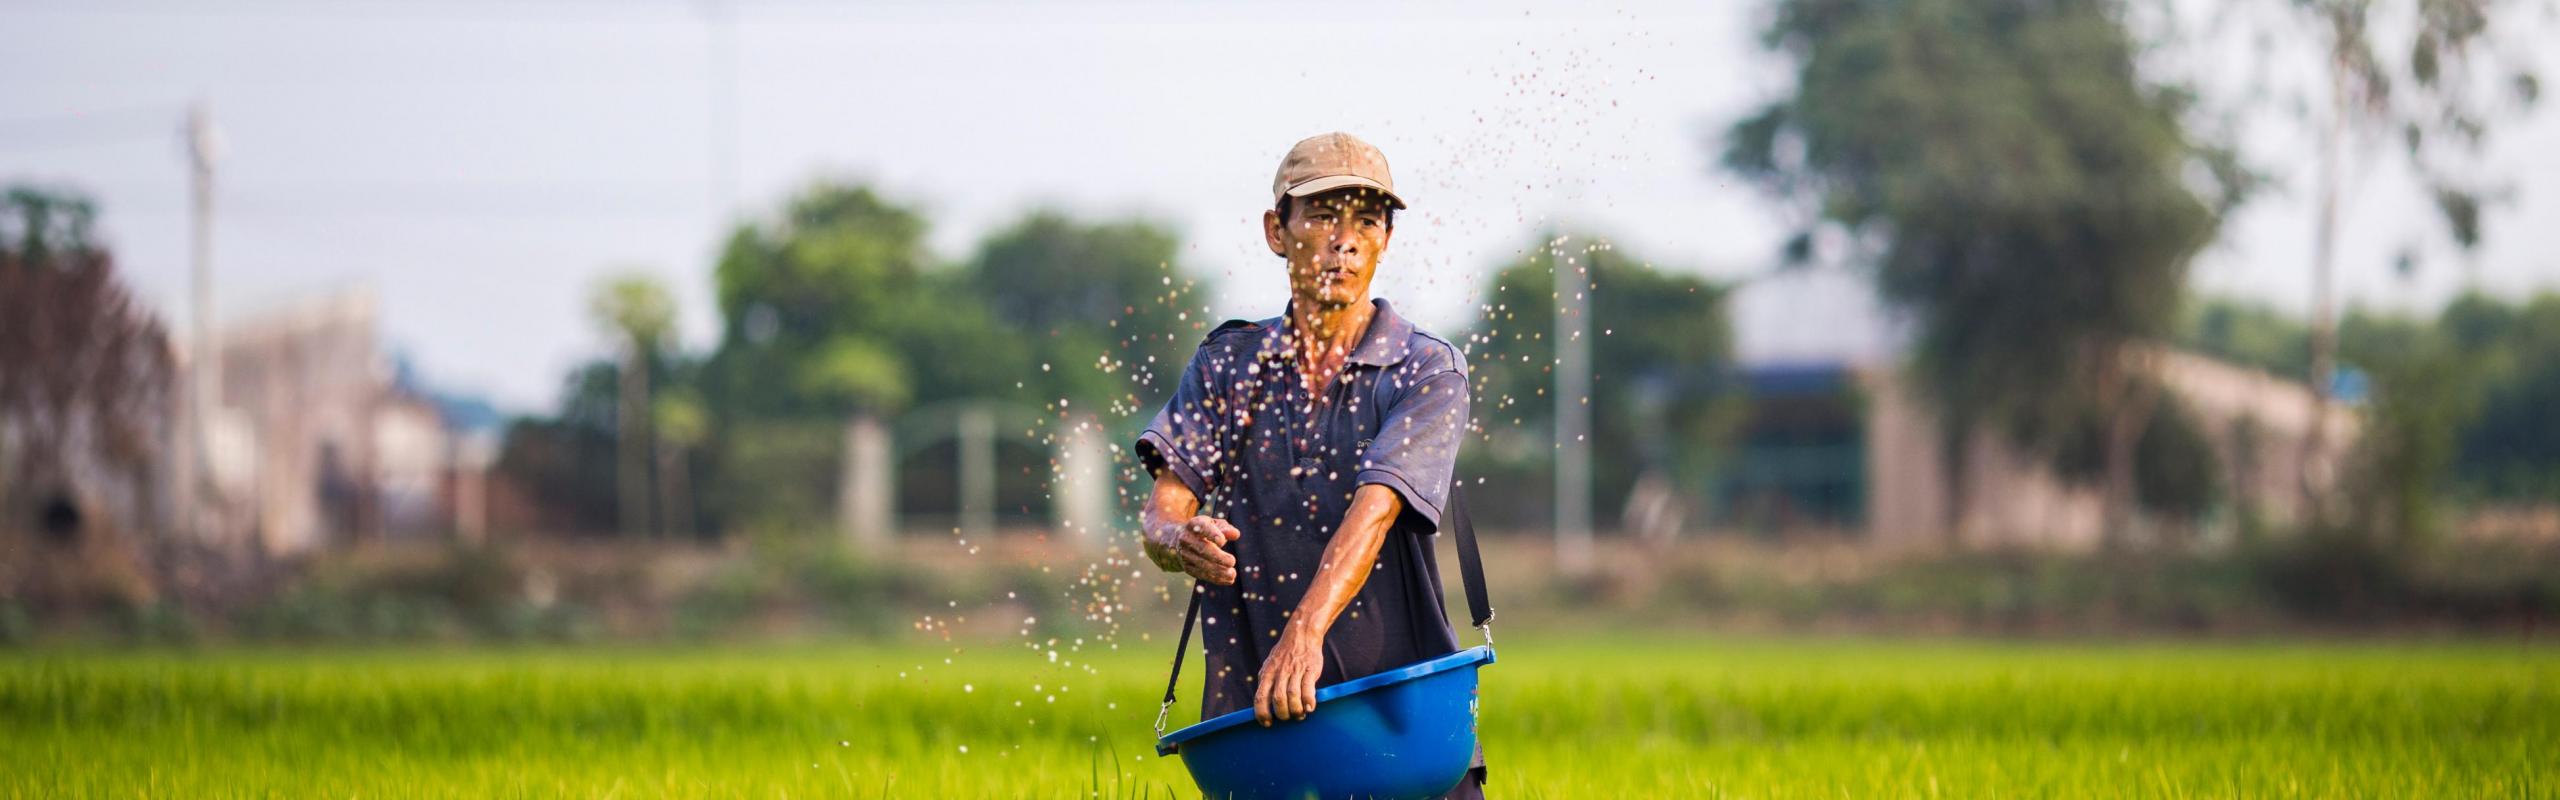 Rice farmer in Vietnam standing in paddy